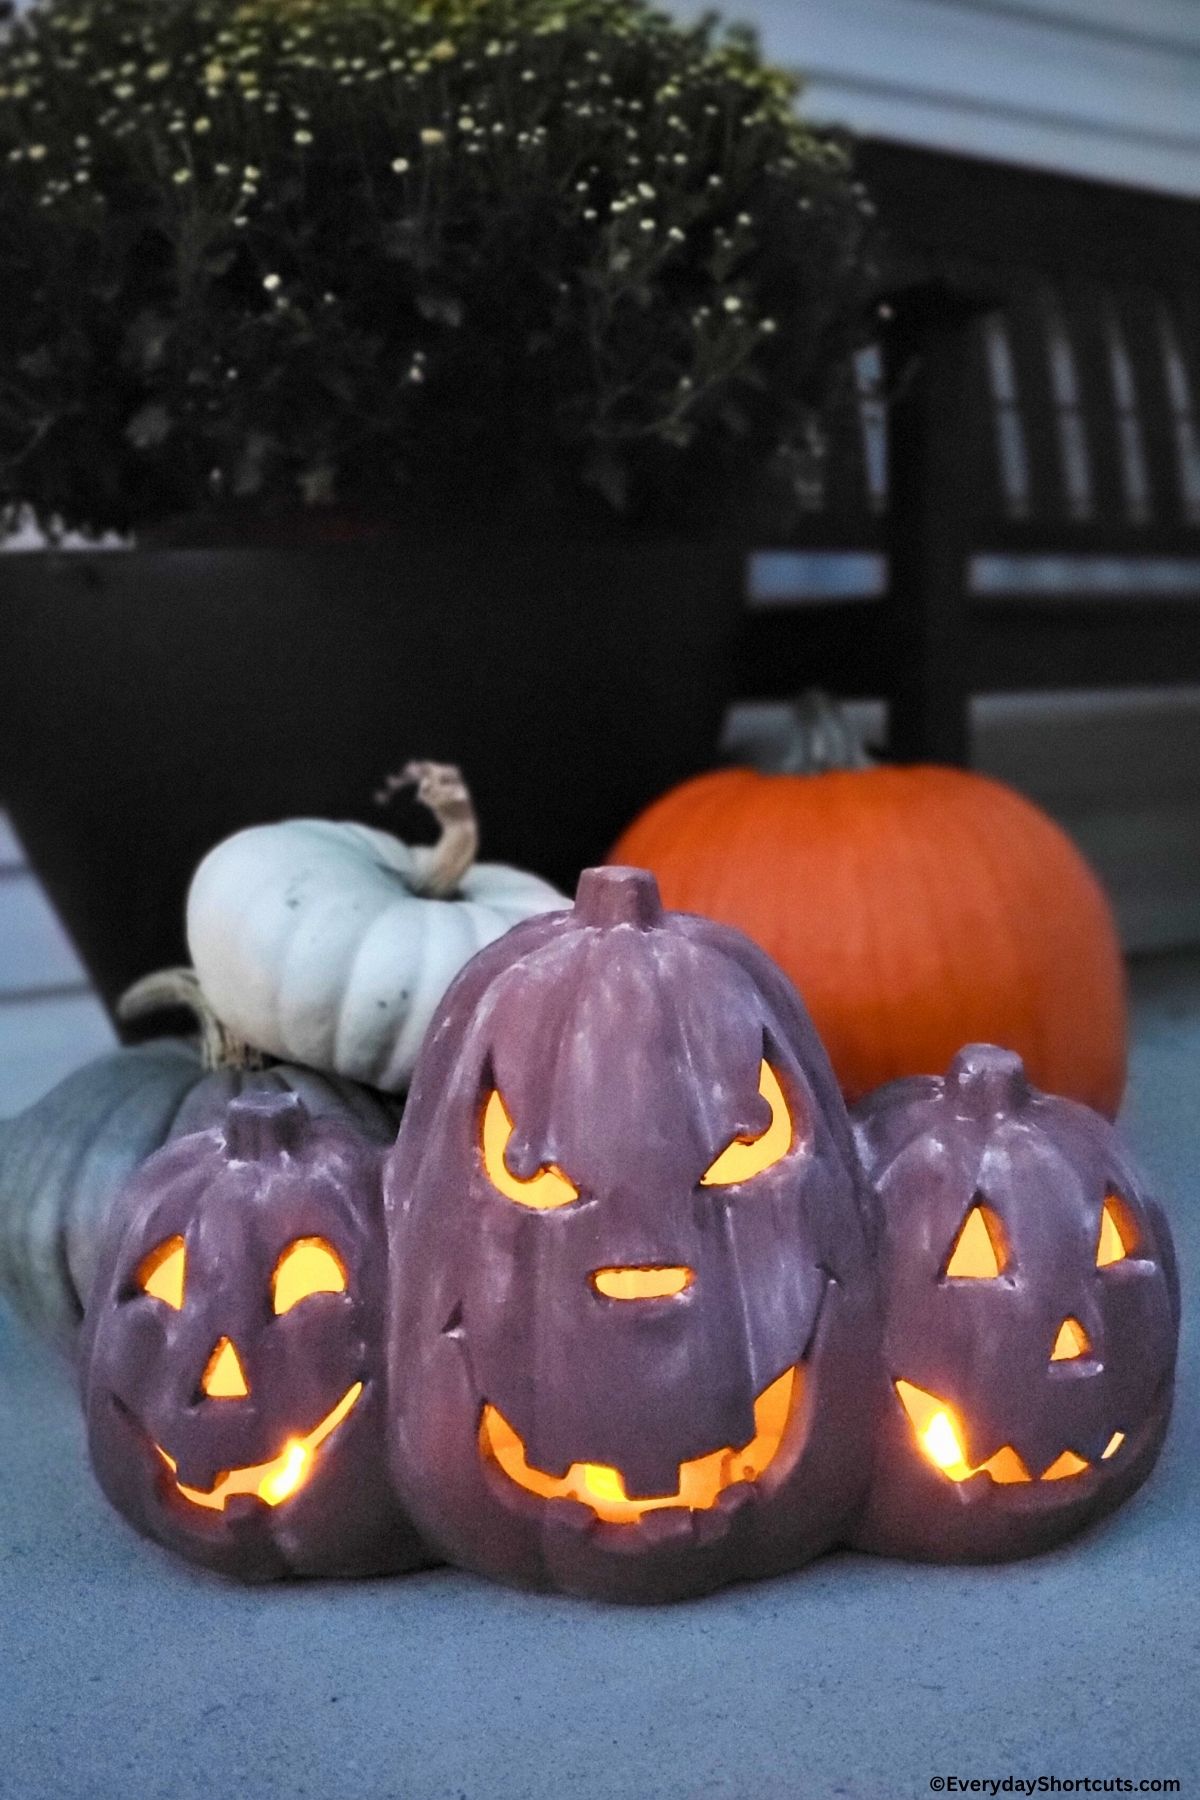 terracotta pumpkins lit up at night